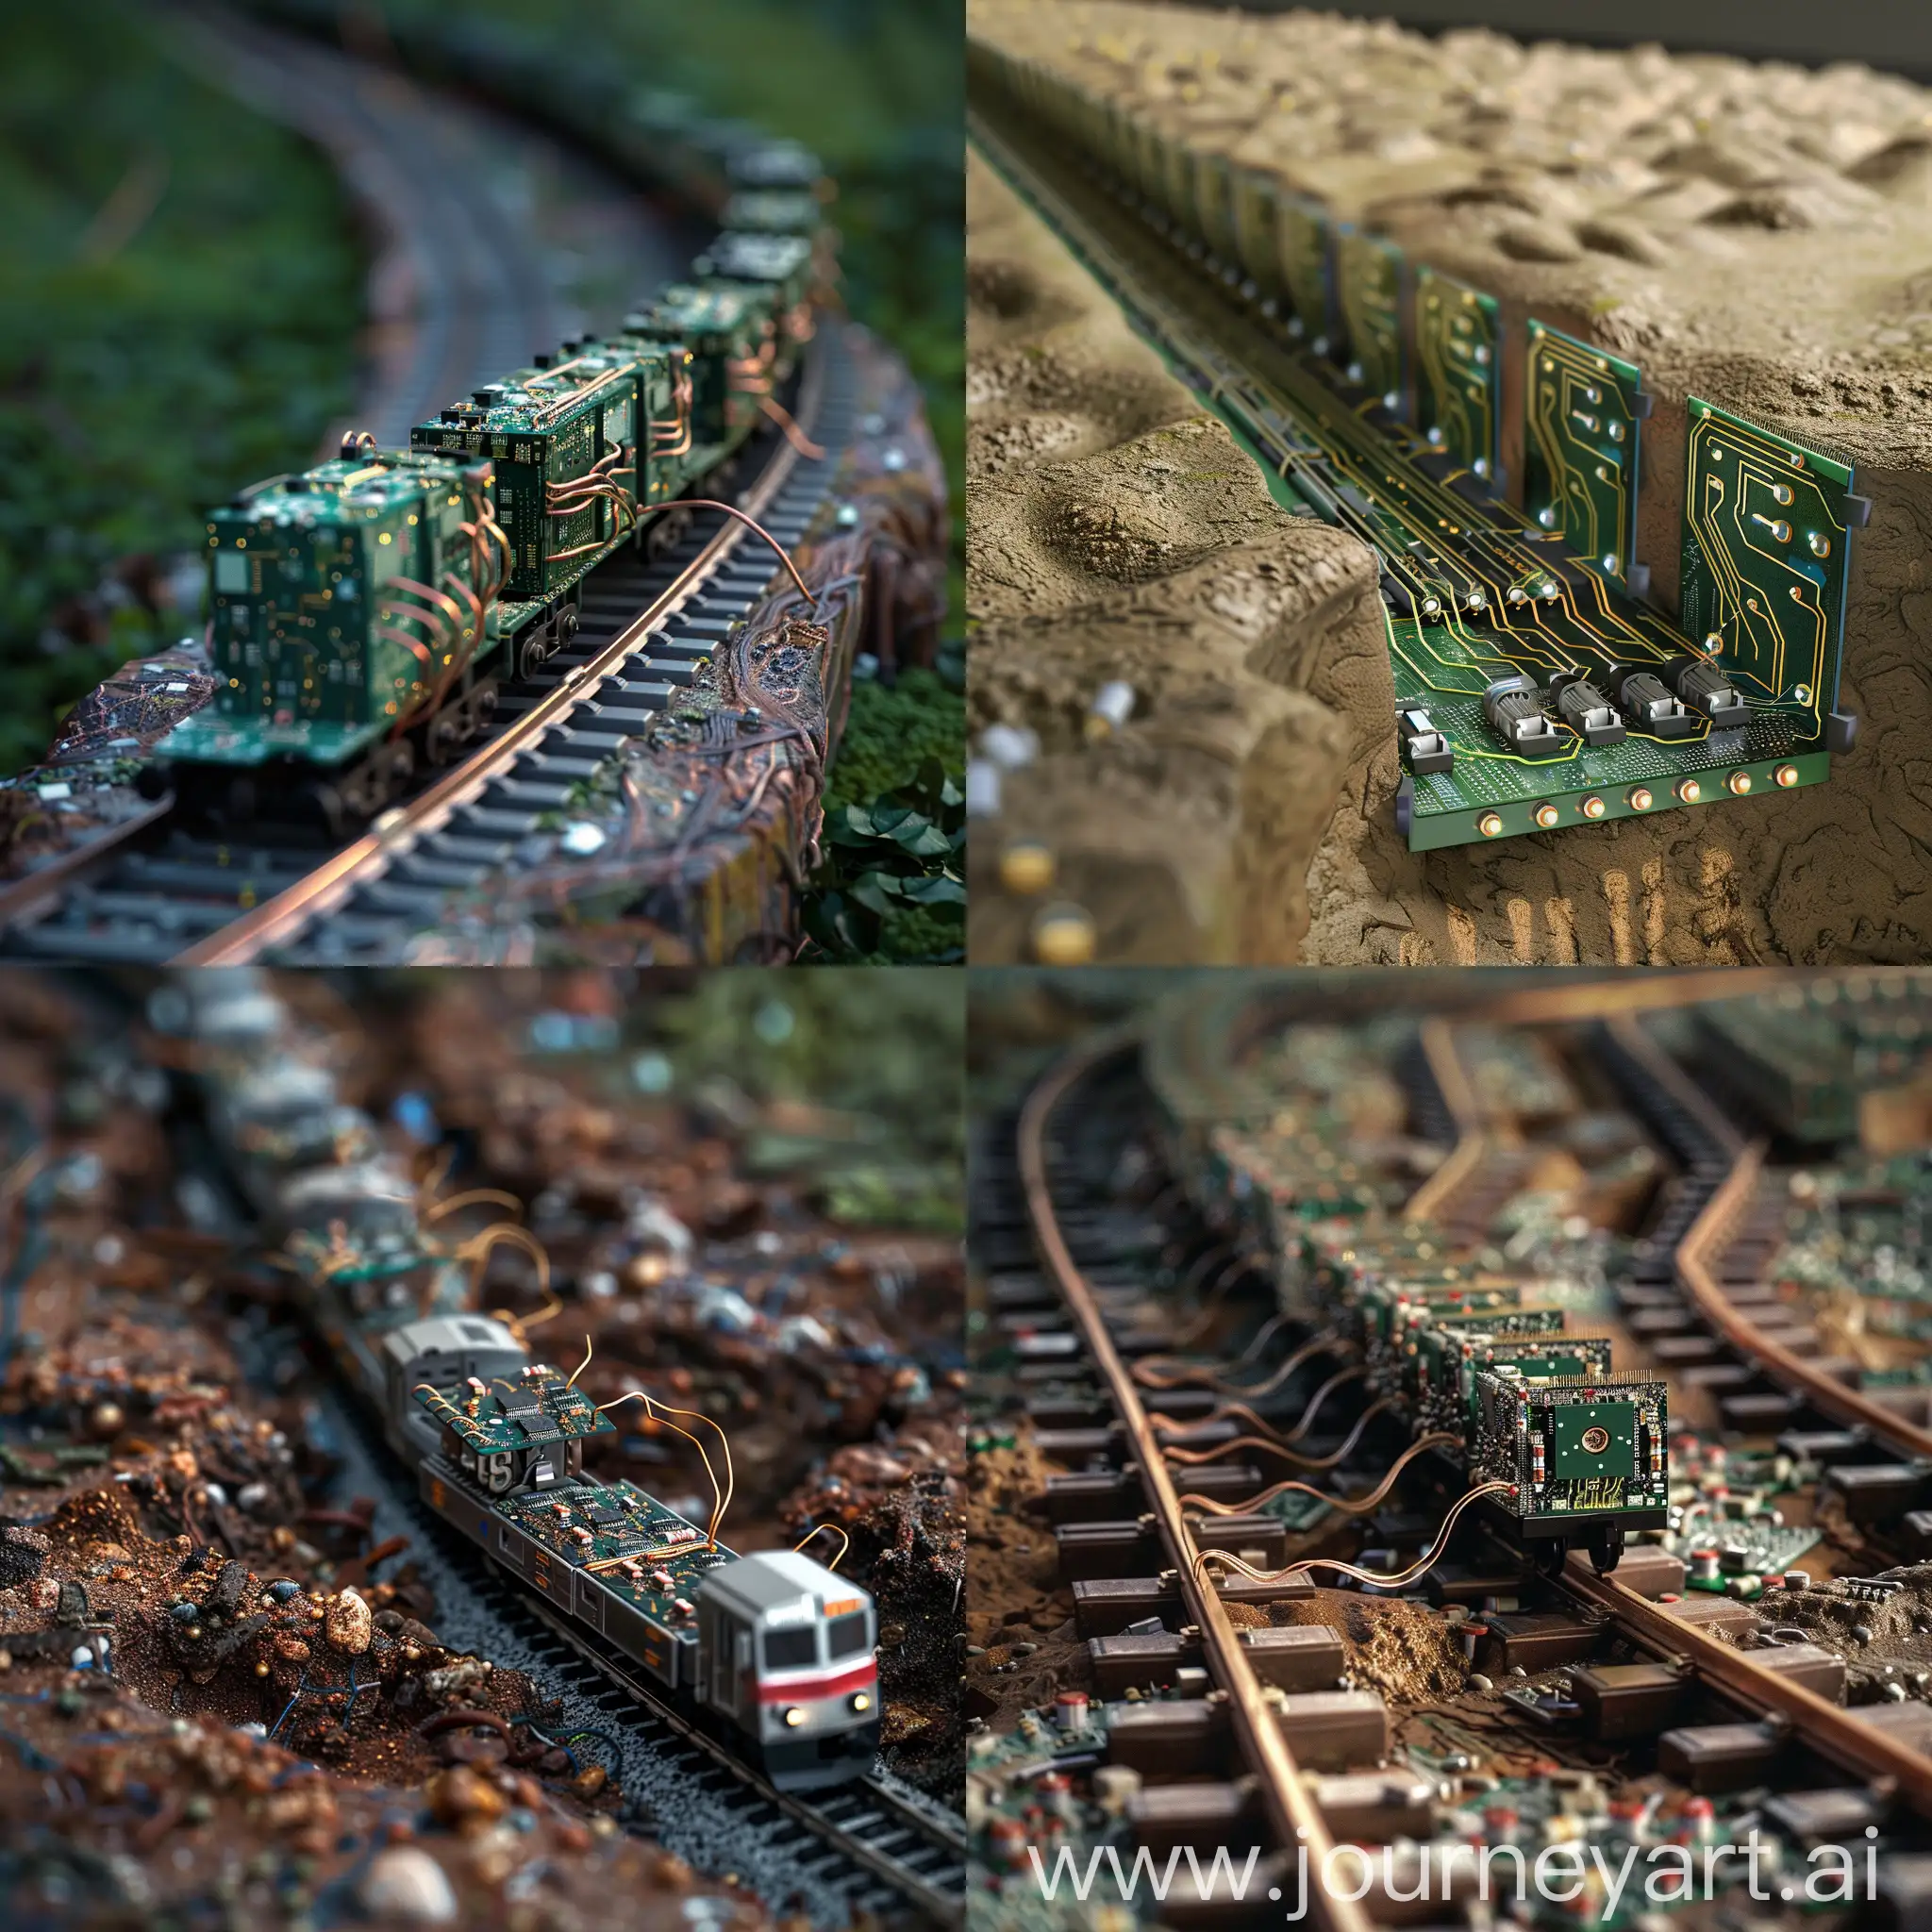 Microchip-Train-Embedding-Wires-in-Soil